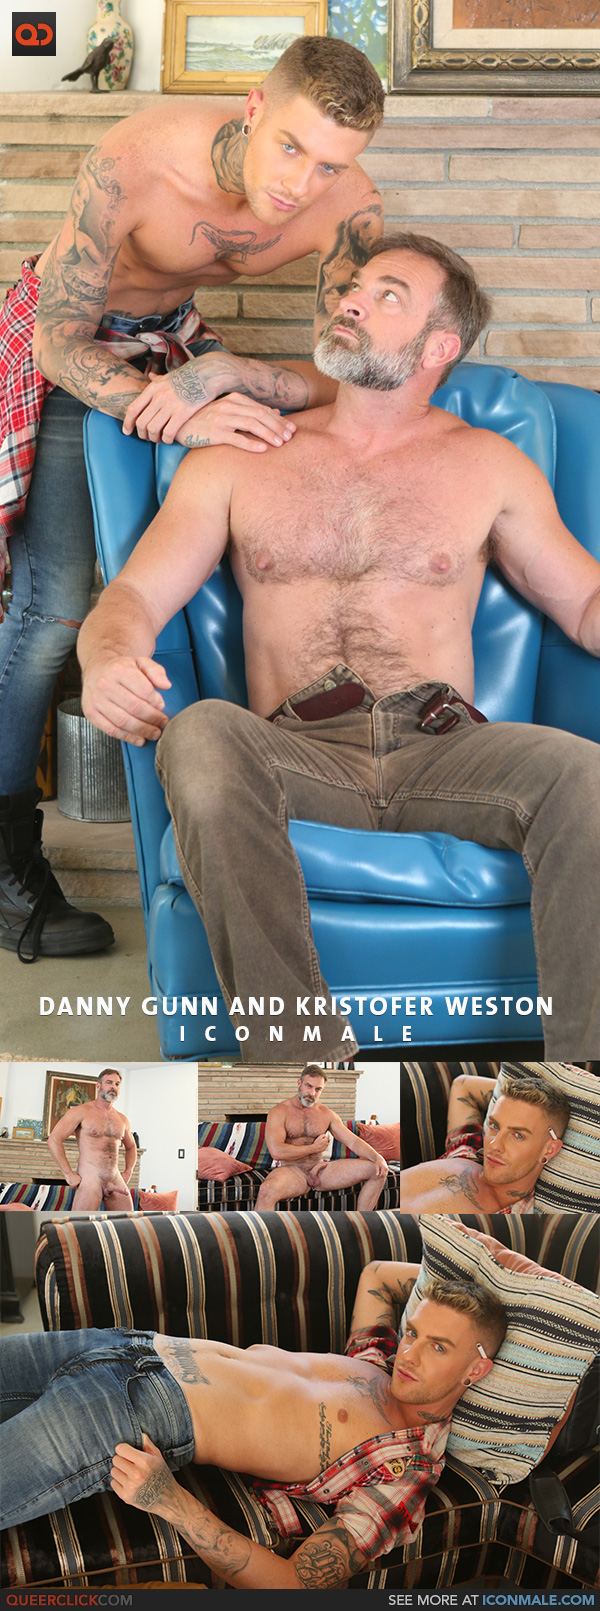 IconMale: Danny Gunn and Kristofer Weston